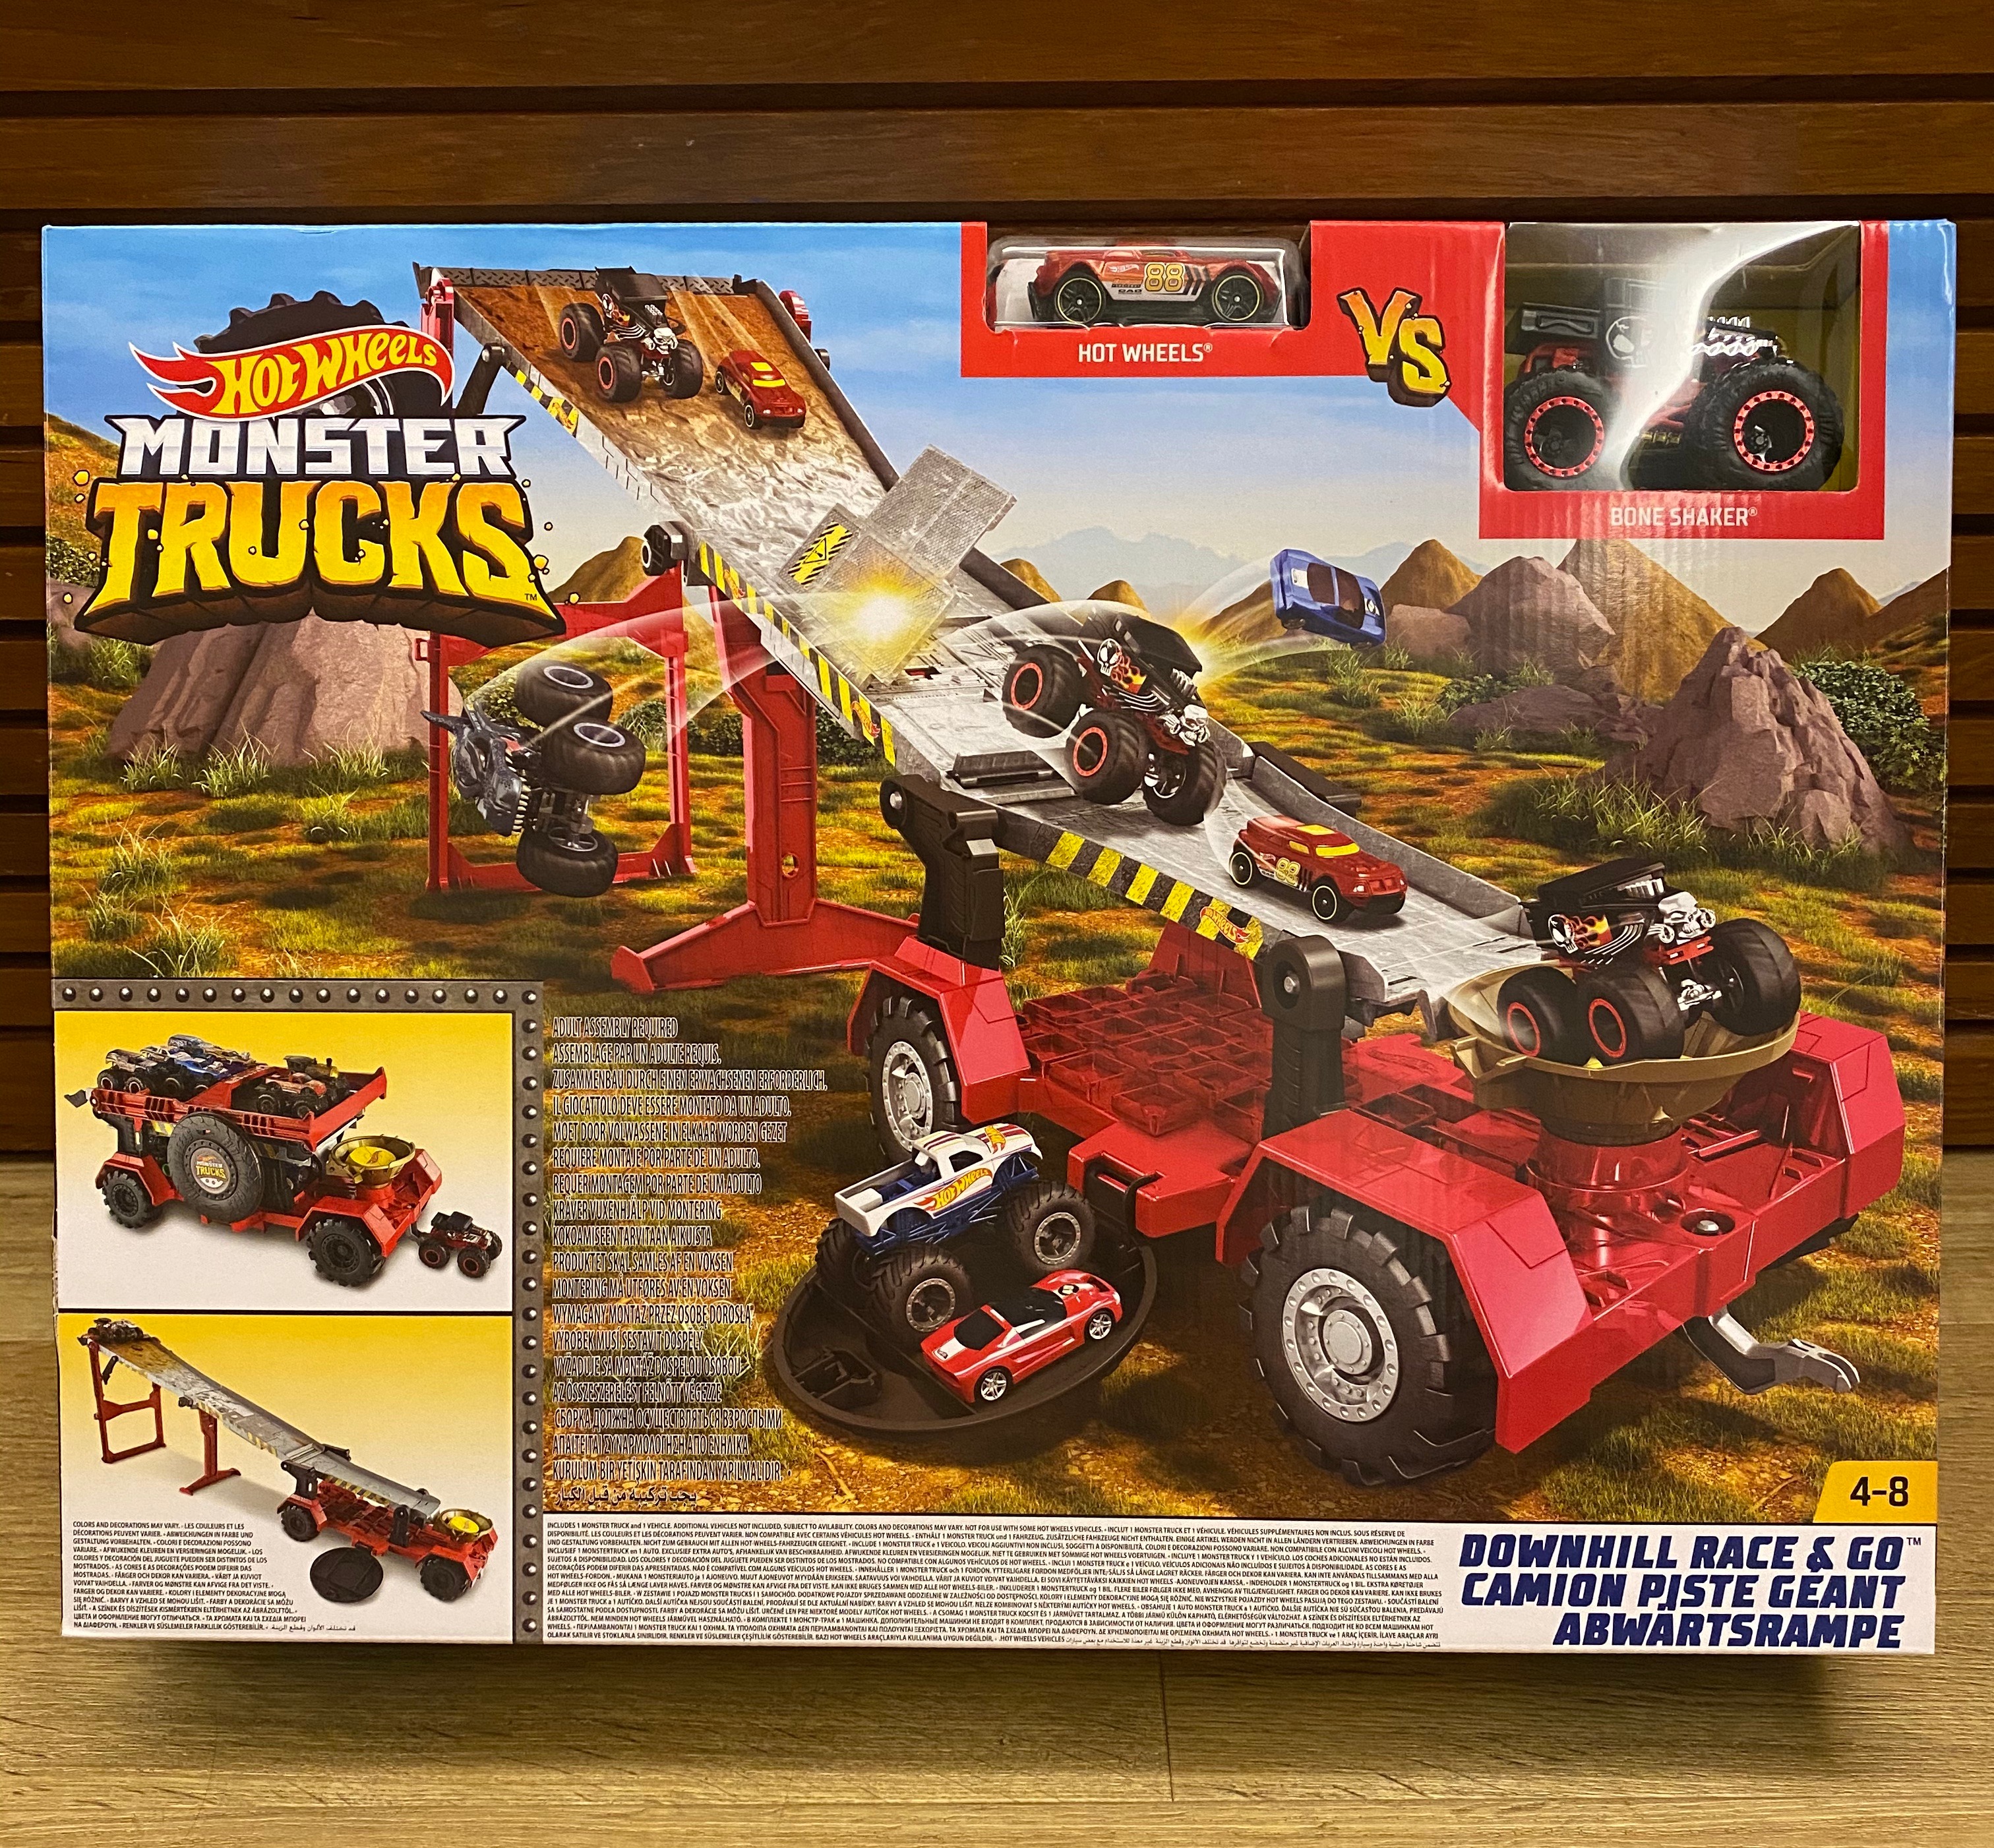 hot wheels monster trucks downhill race & go playset